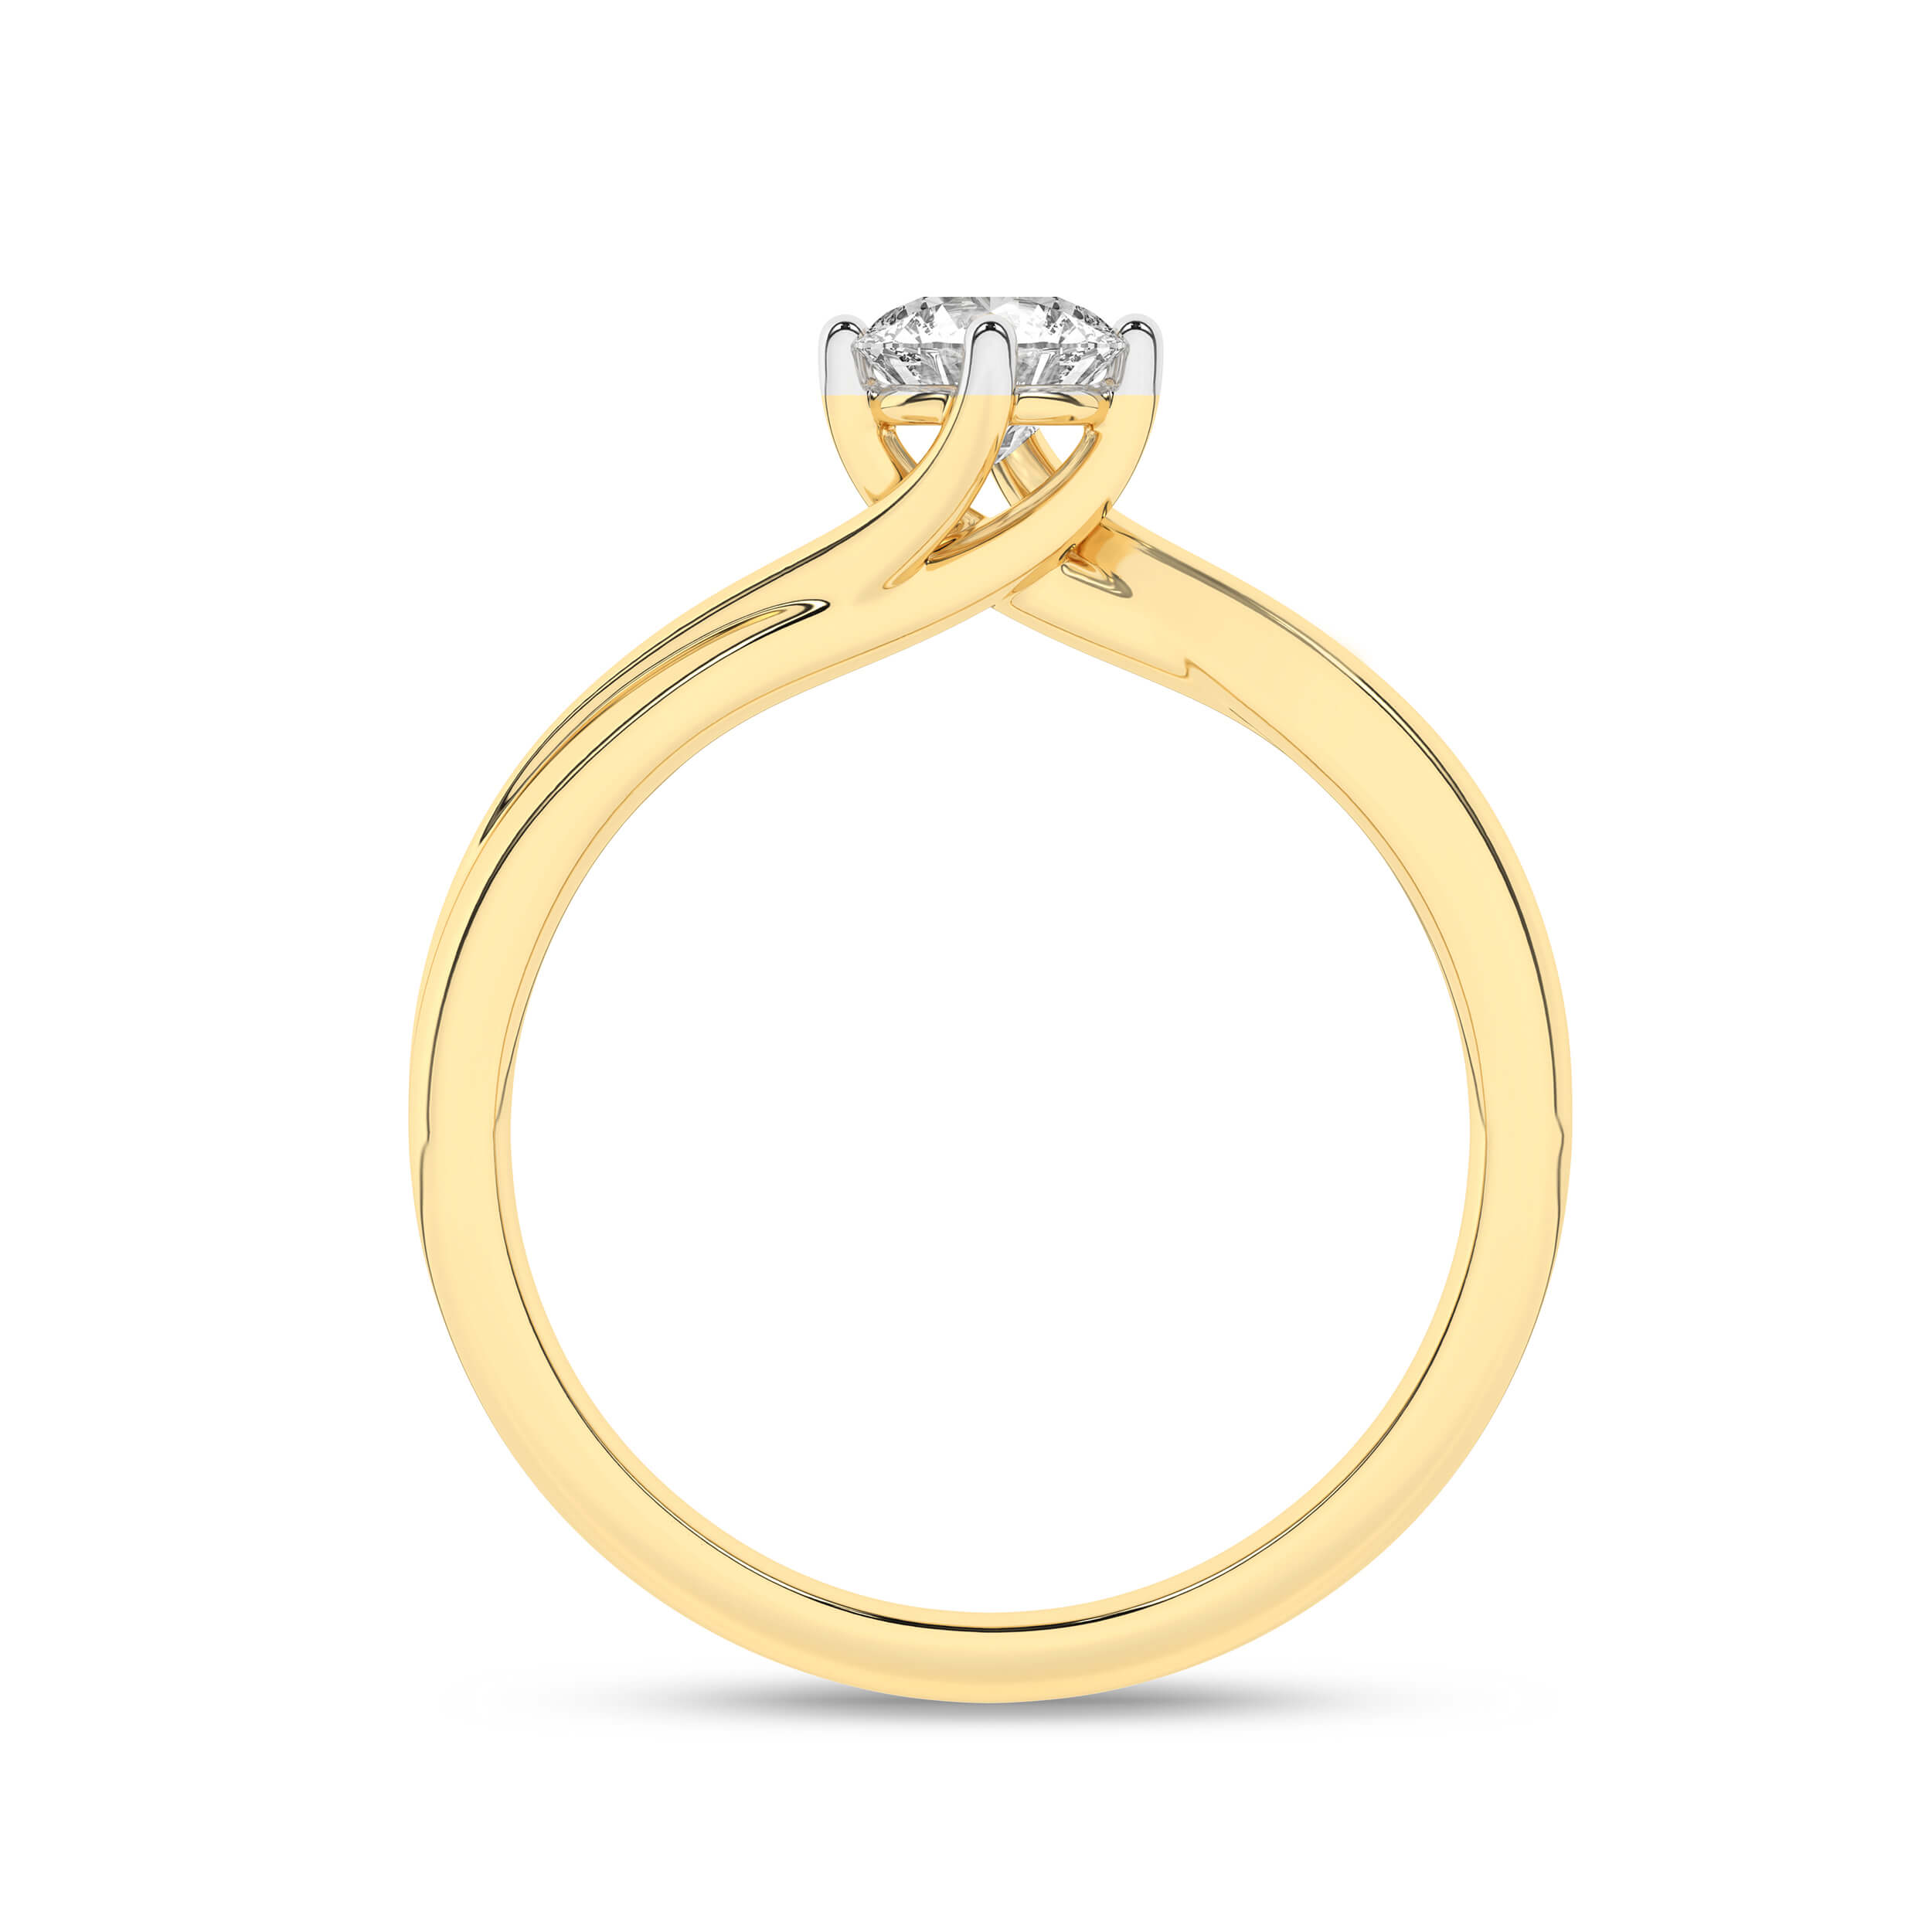 Inel de logodna din Aur Galben 14K cu Diamant 0.33Ct, articol MSD0391EG, previzualizare foto 1